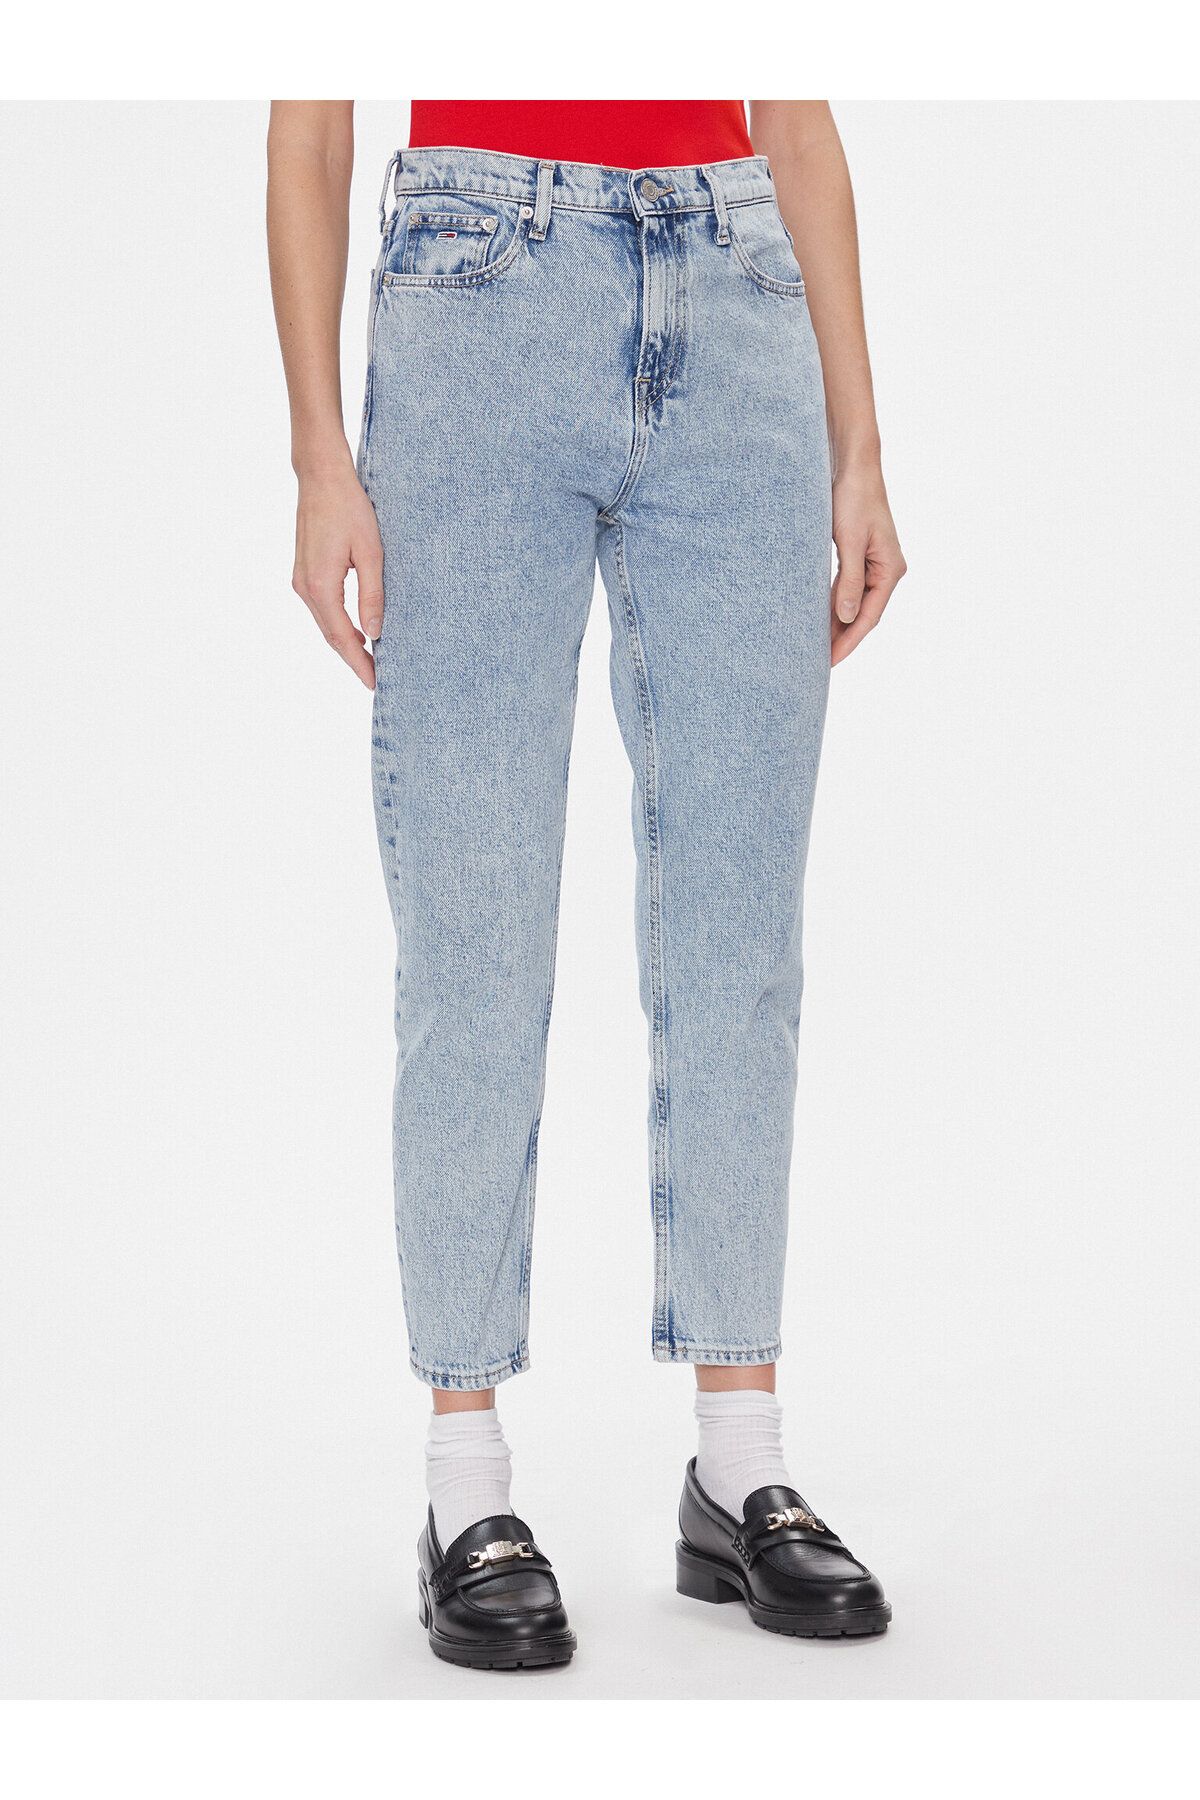 Tommy Hilfiger Kadın Denim Kumaş Normal Bel Düz Model Mavi Jeans DW0DW17453-1AB